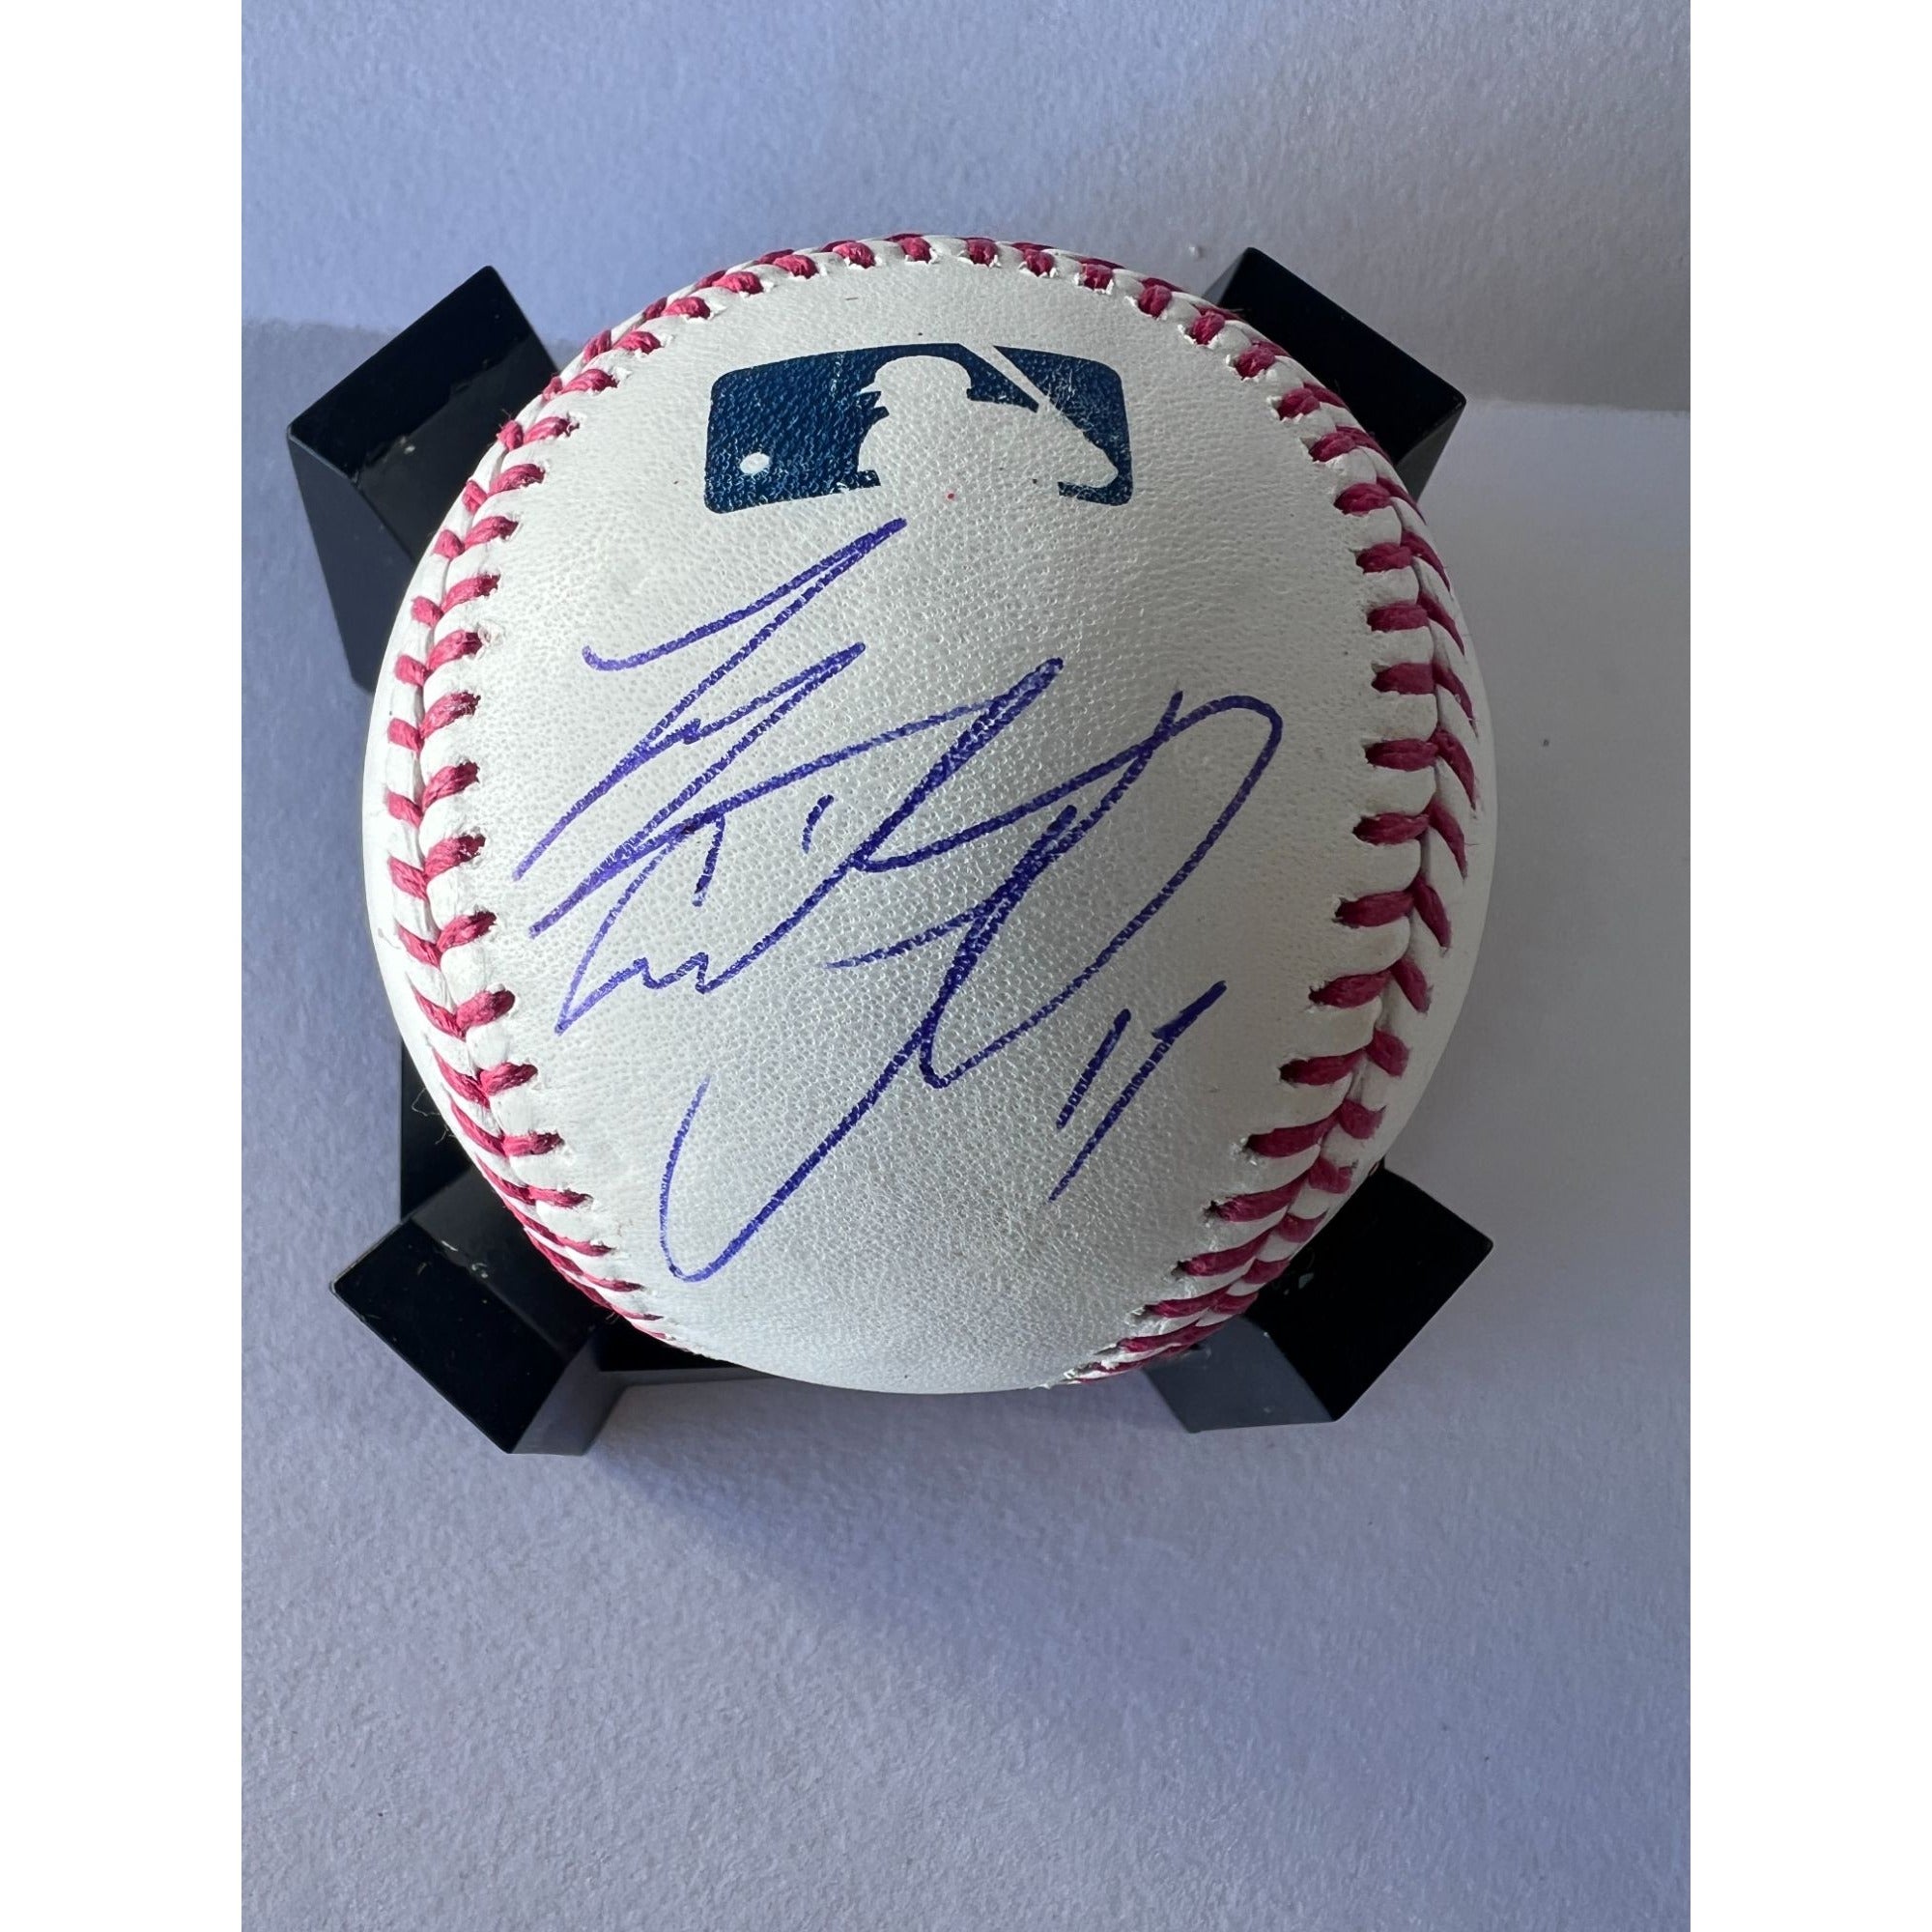 Shohei Ohtani Rawlings Major League official baseball signed with proof